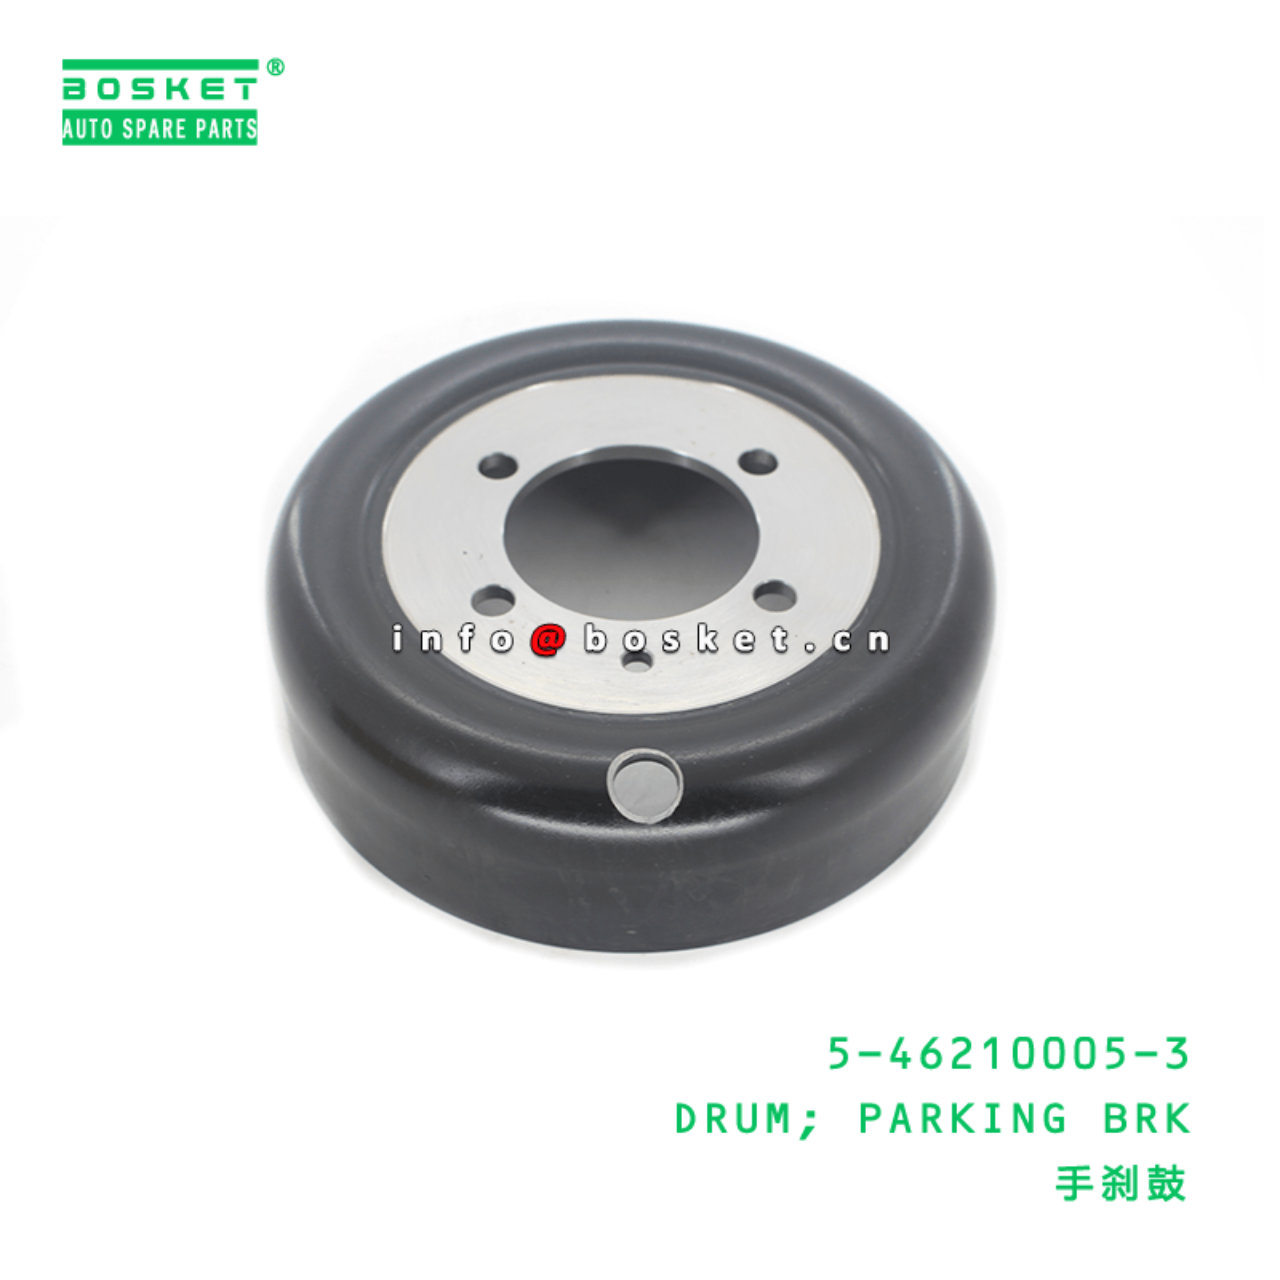 5-46210005-3 Parking Brake Drum 5462100053 Suitable for ISUZU NKR XD 4BA1